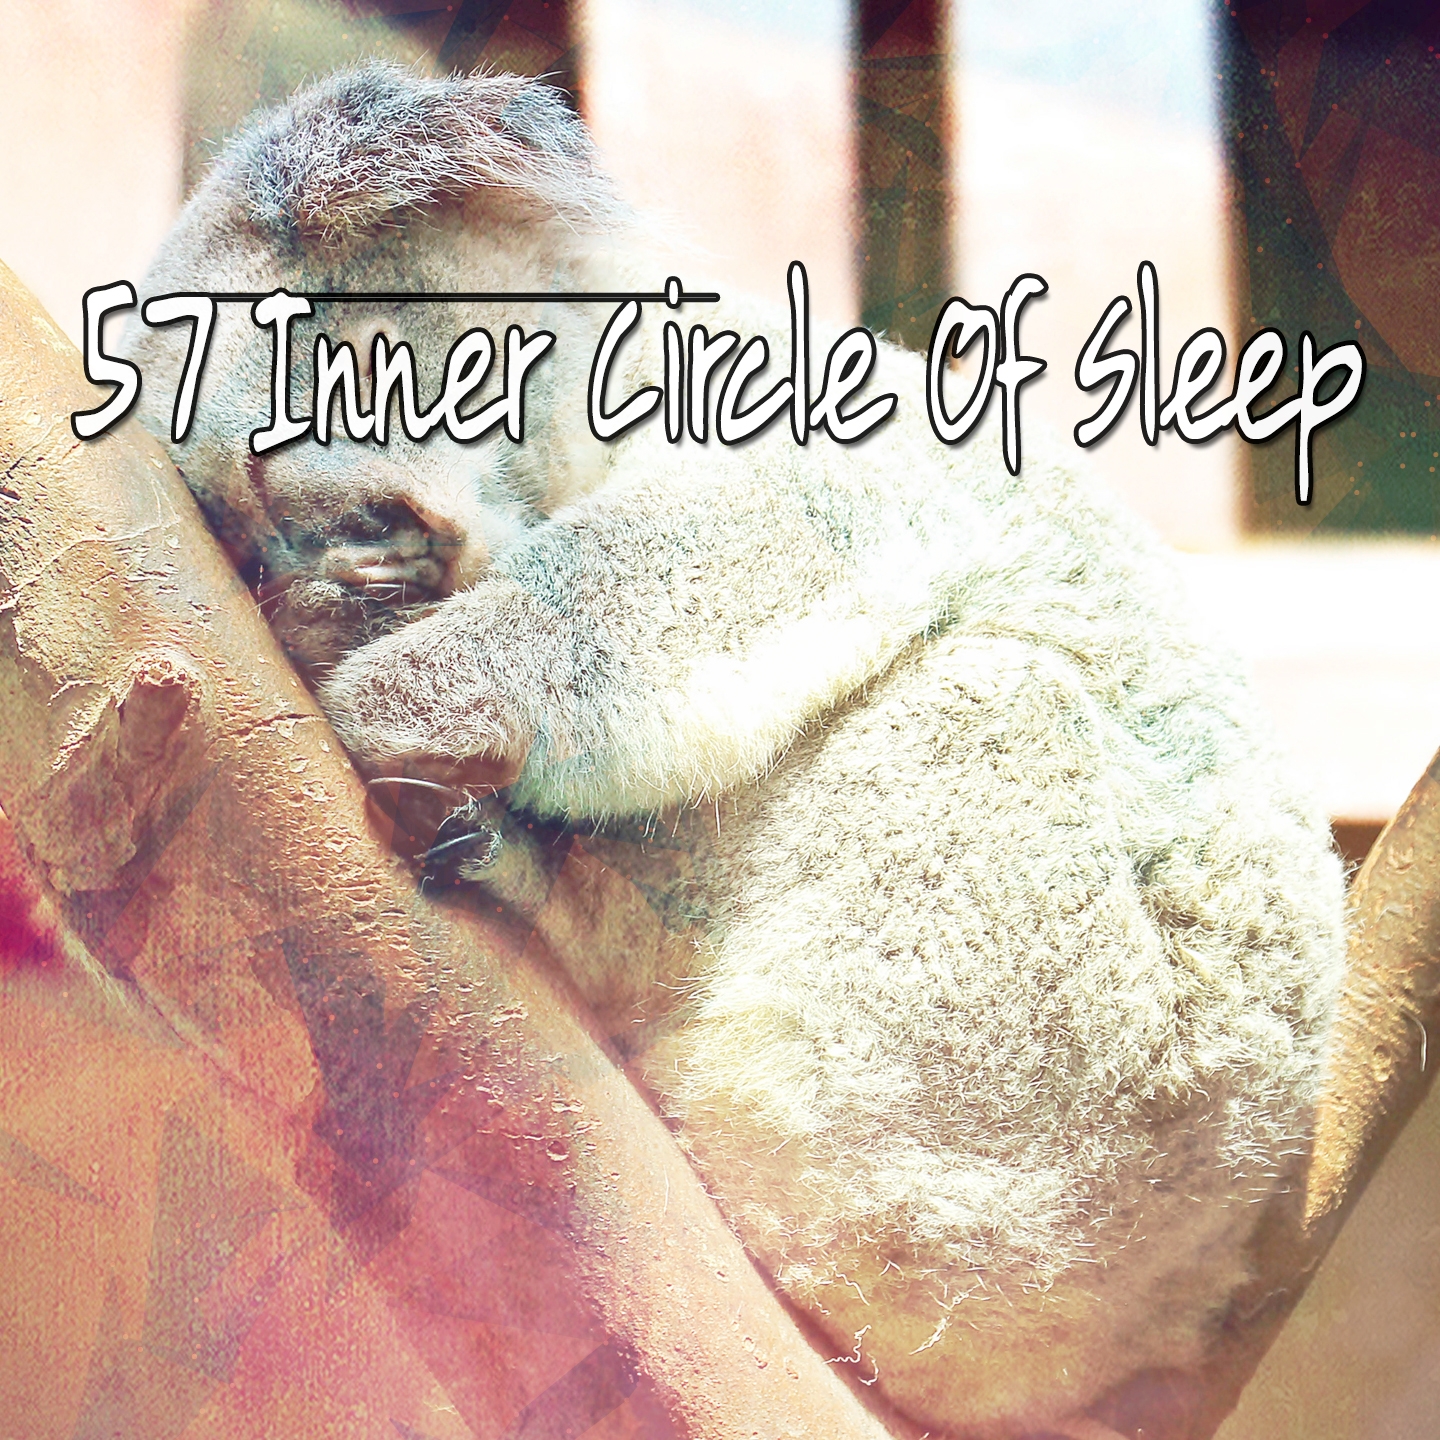 57 Inner Circle Of Sleep